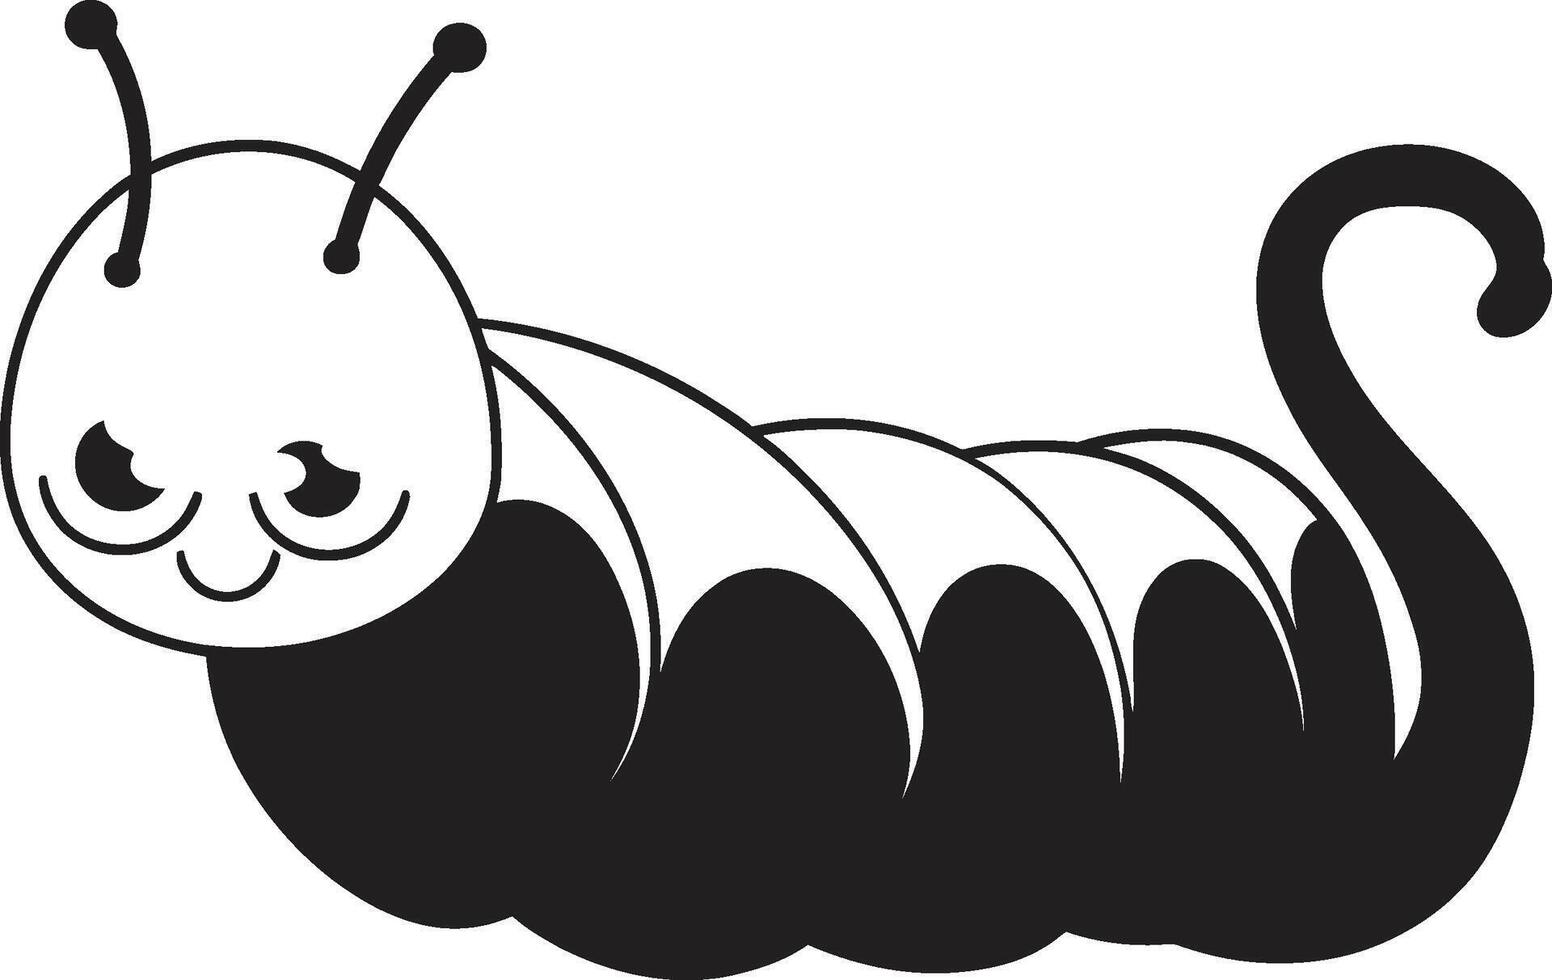 Natures Progression Elegant Monochrome Emblem for Caterpillar Icon Creeping Chic Sleek Vector Logo Design for Stylish Caterpillar